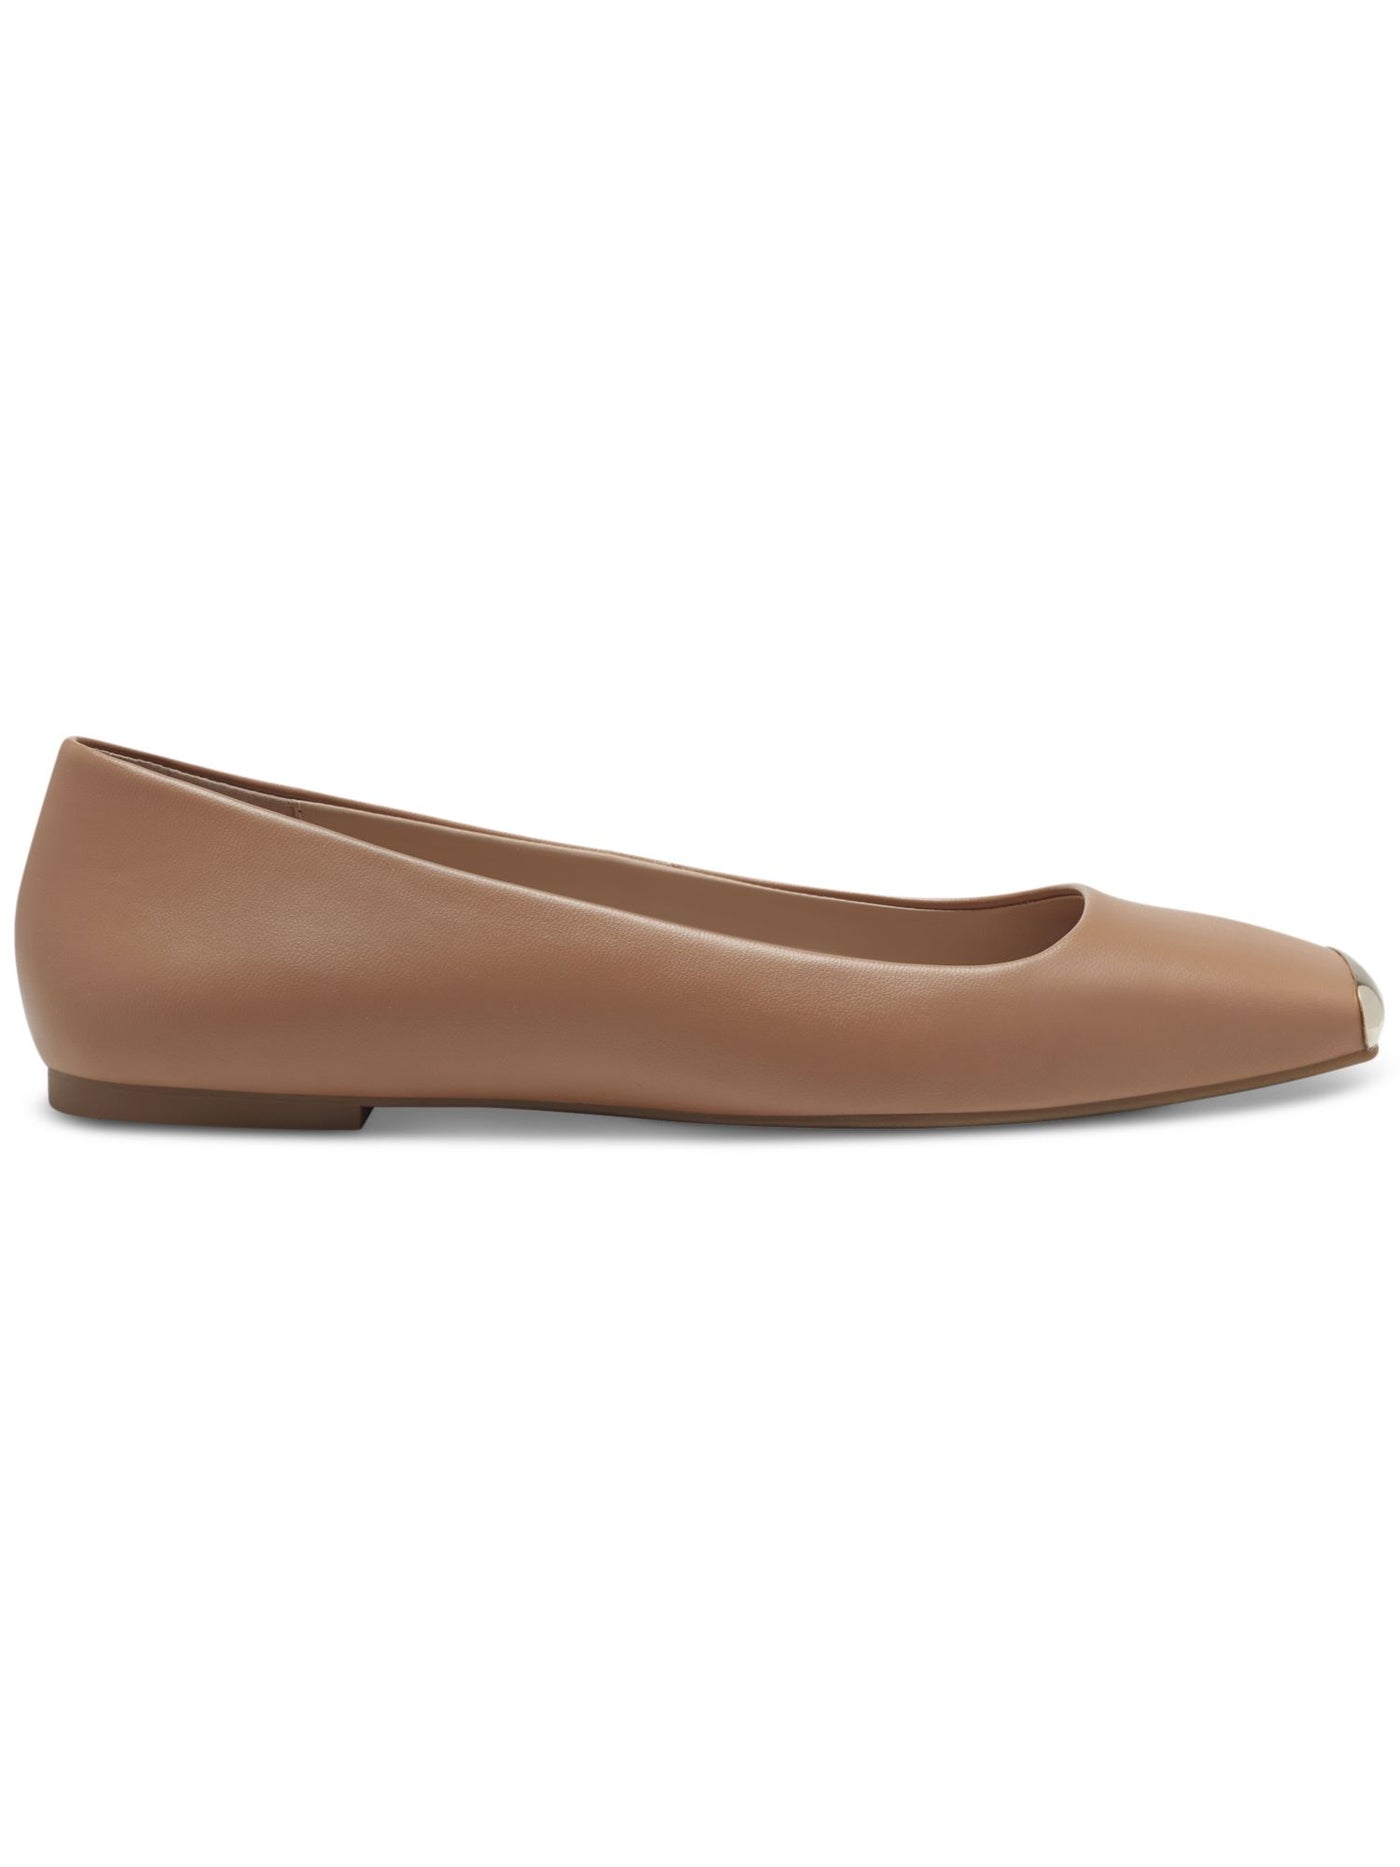 ALFANI Womens Brown Flexible Sole Padded Metallic Neptoon Square Toe Block Heel Slip On Flats Shoes 5 M